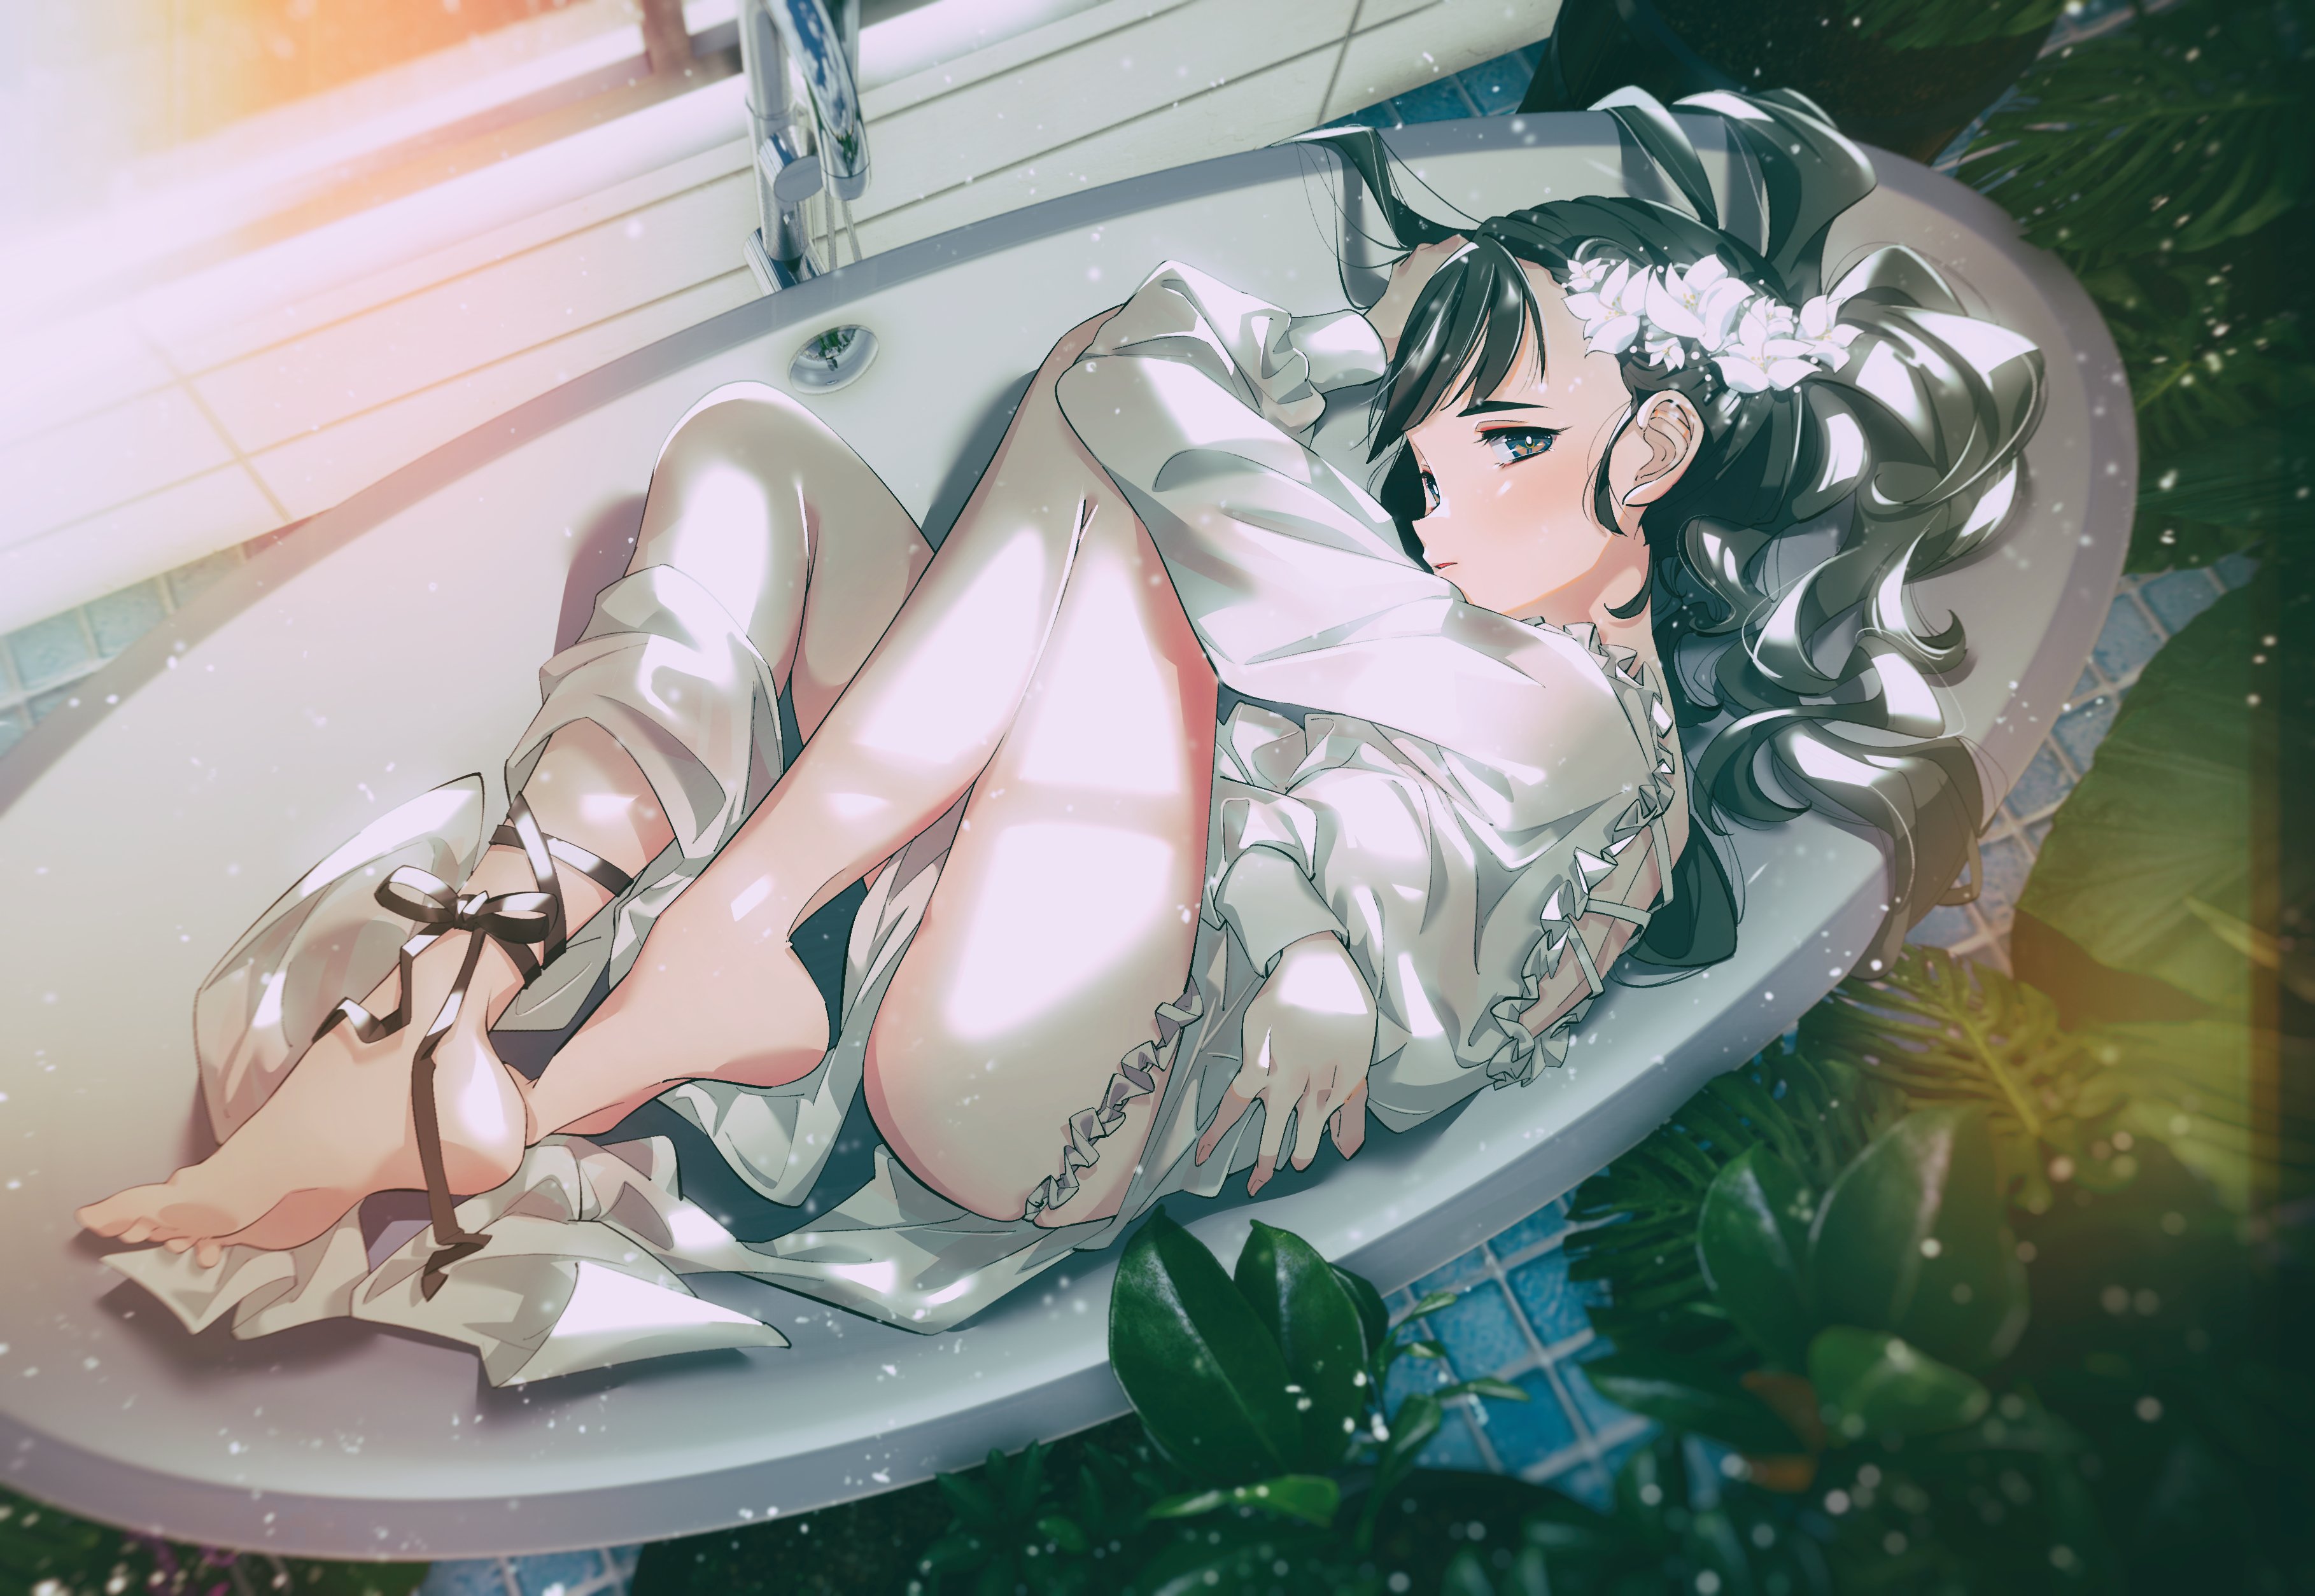 Anime 3637x2508 Shiomi anime anime girls plants bathroom dark hair long hair faucets mirror flowers ribbon looking at viewer dress barefoot